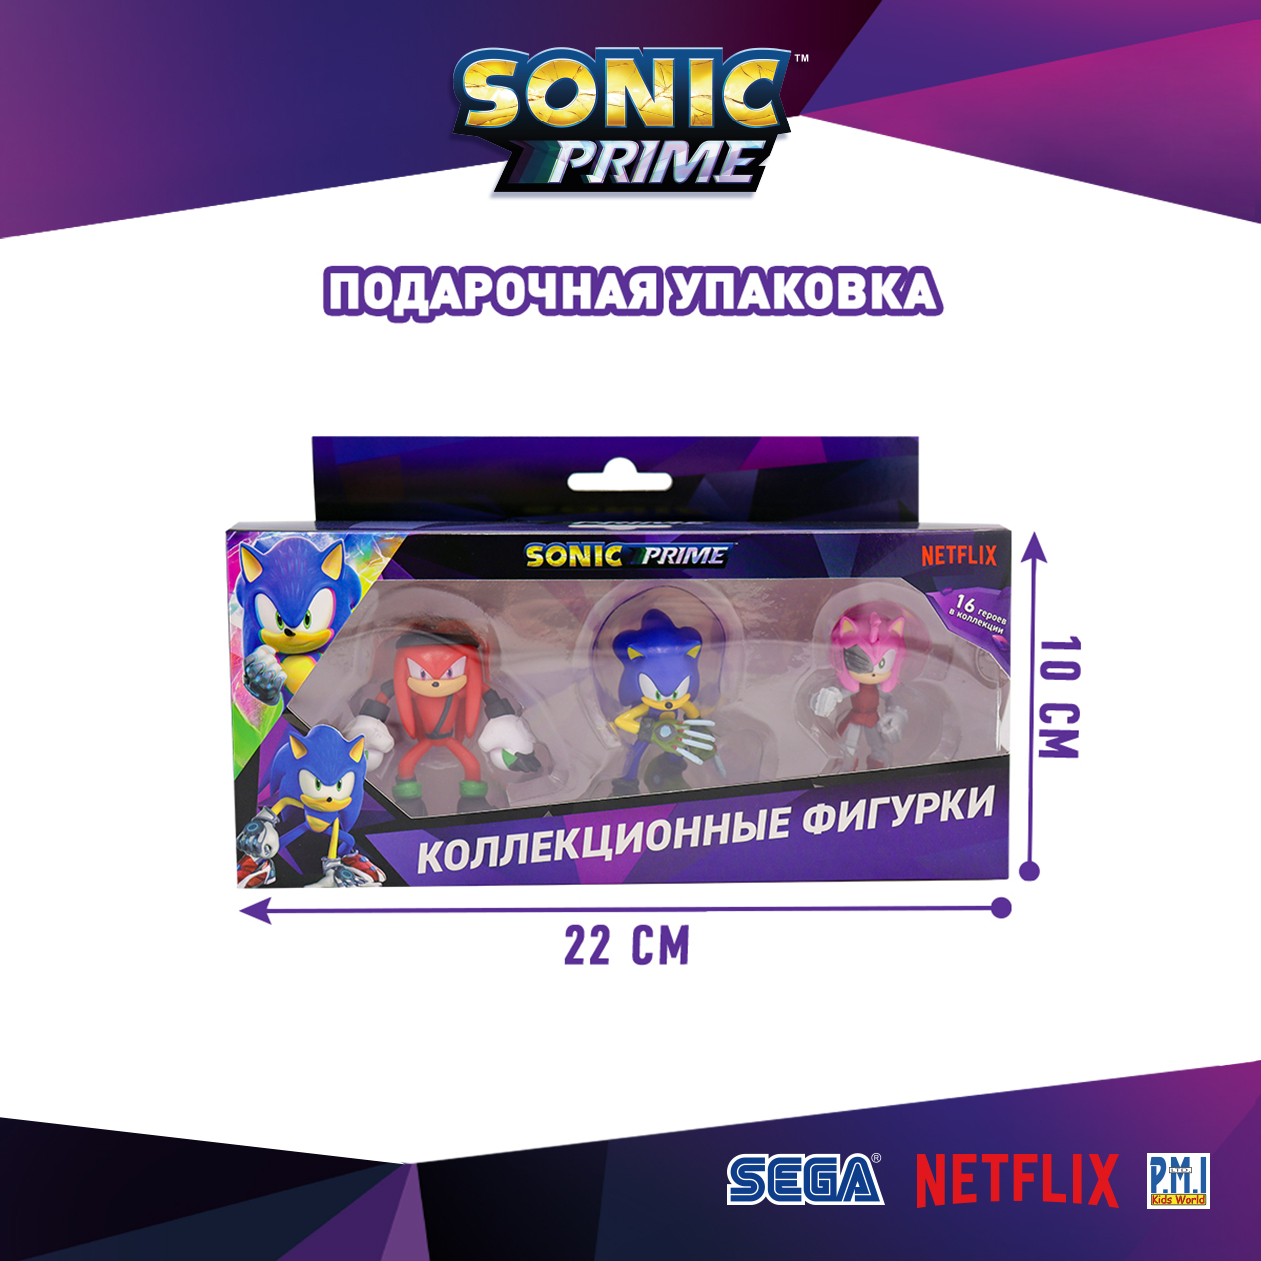 Набор игровой PMI Sonic Prime фигурки 3 шт SON2021-A - фото 6